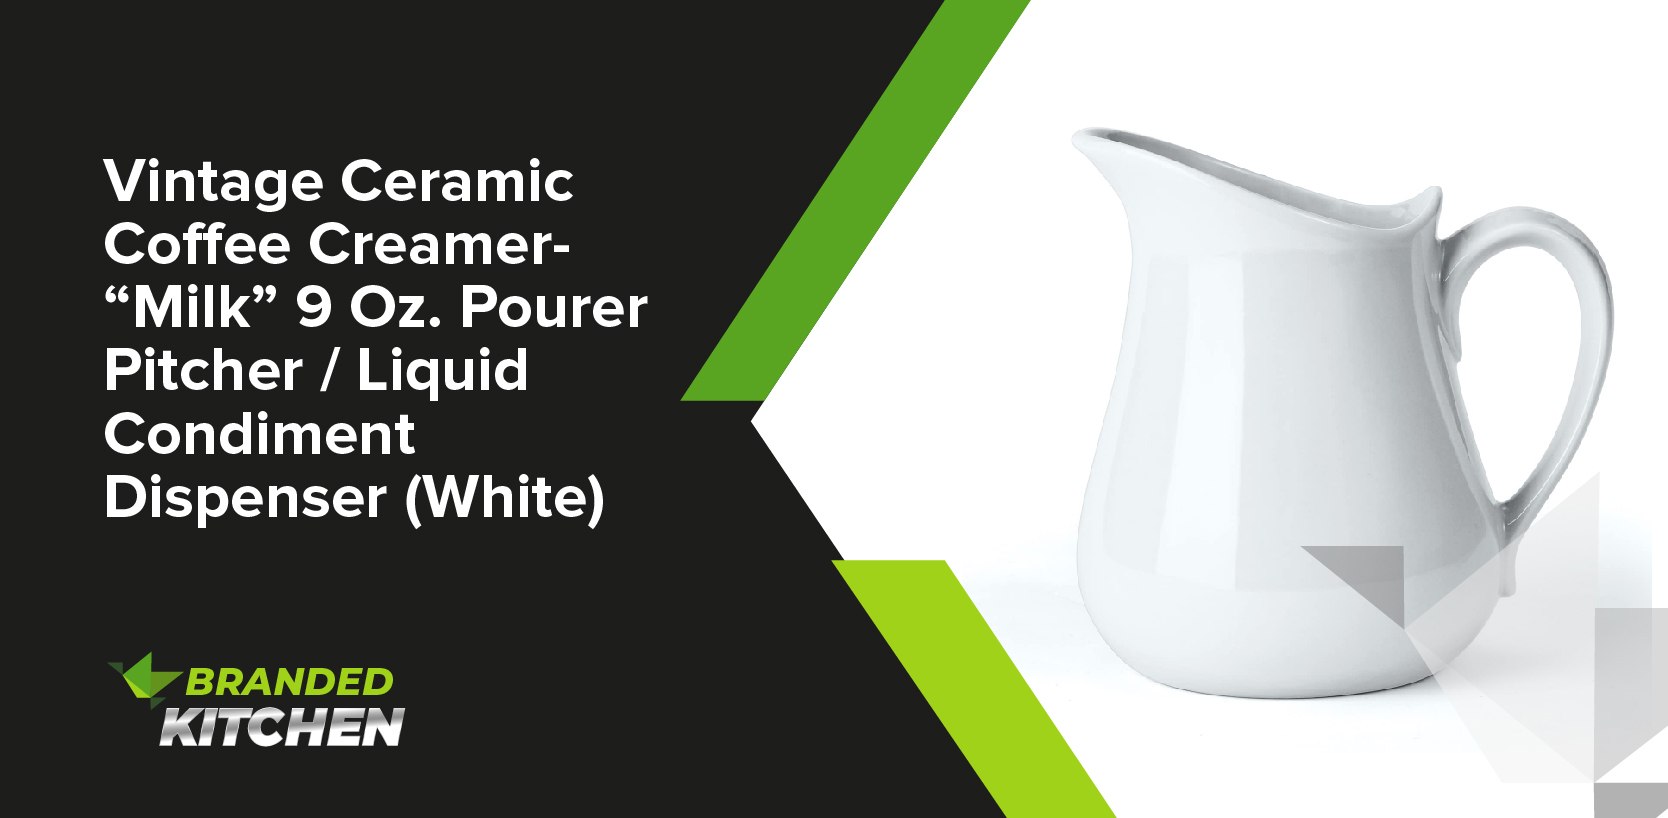 Vintage Ceramic Coffee Creamer- “Milk” 9 Oz. Pourer Pitcher / Liquid Condiment Dispenser (White)